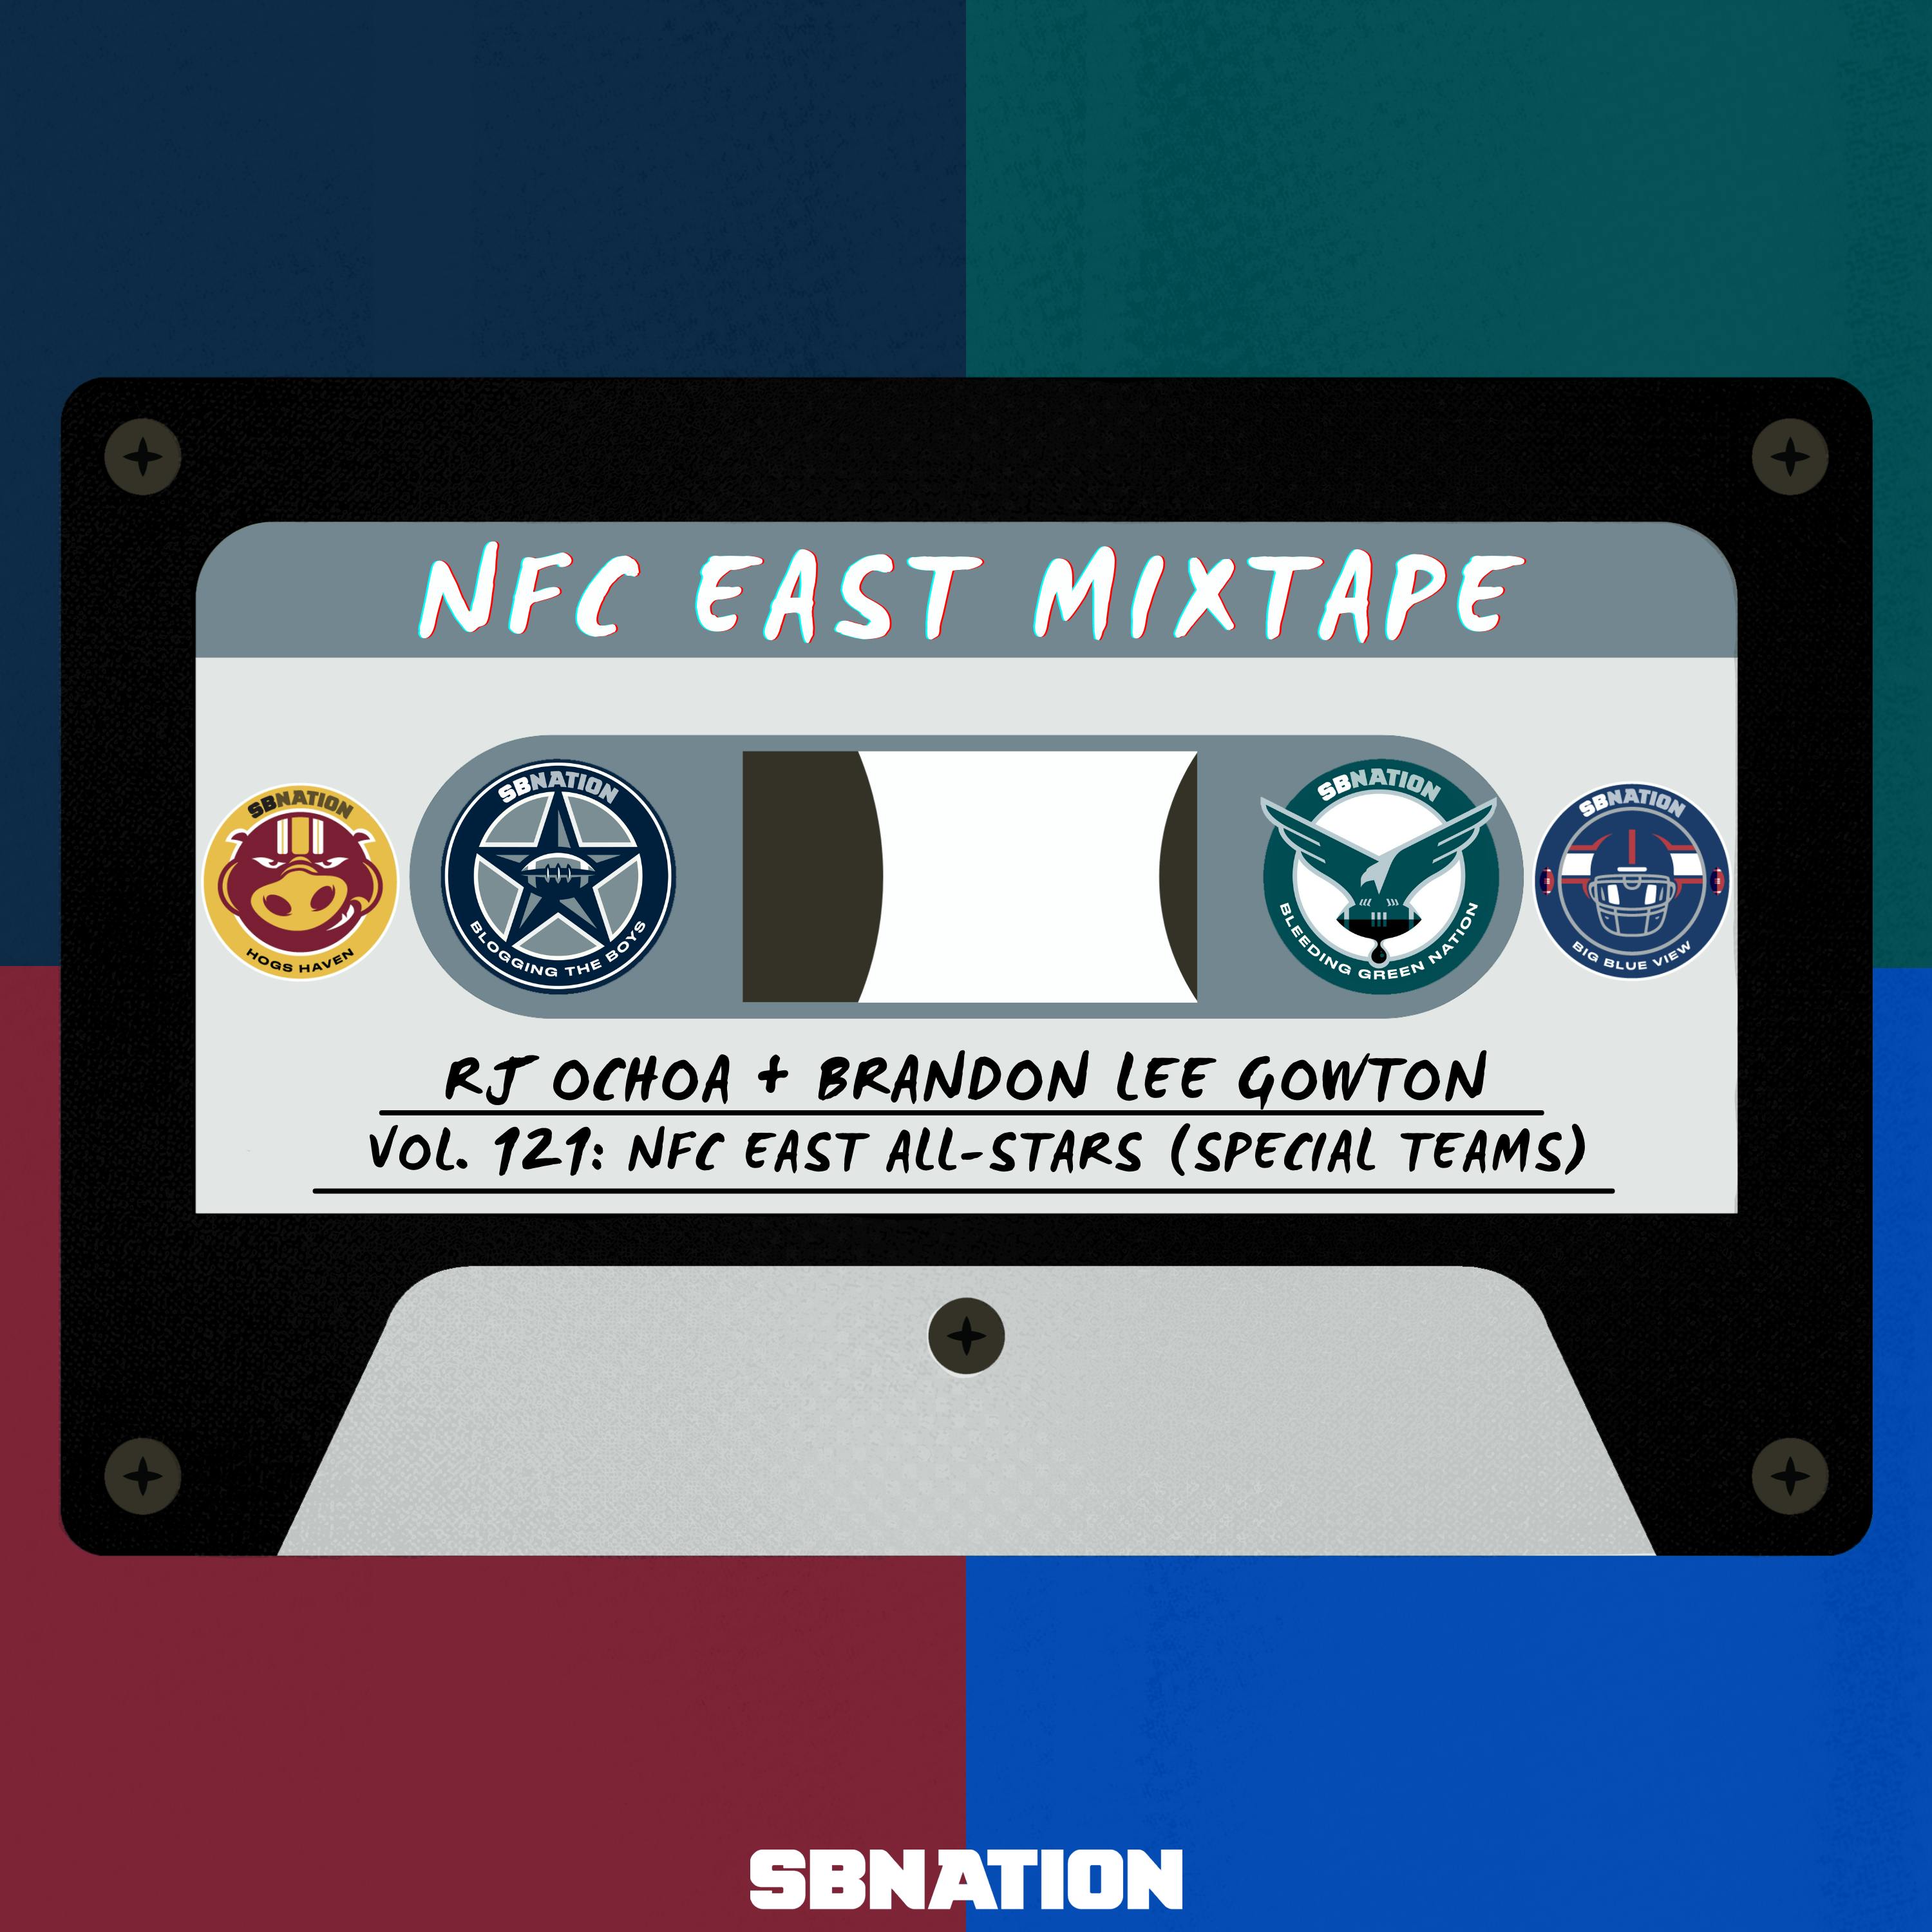 NFC East Mixtape Vol.121: NFC East All-Stars (Special Teams)